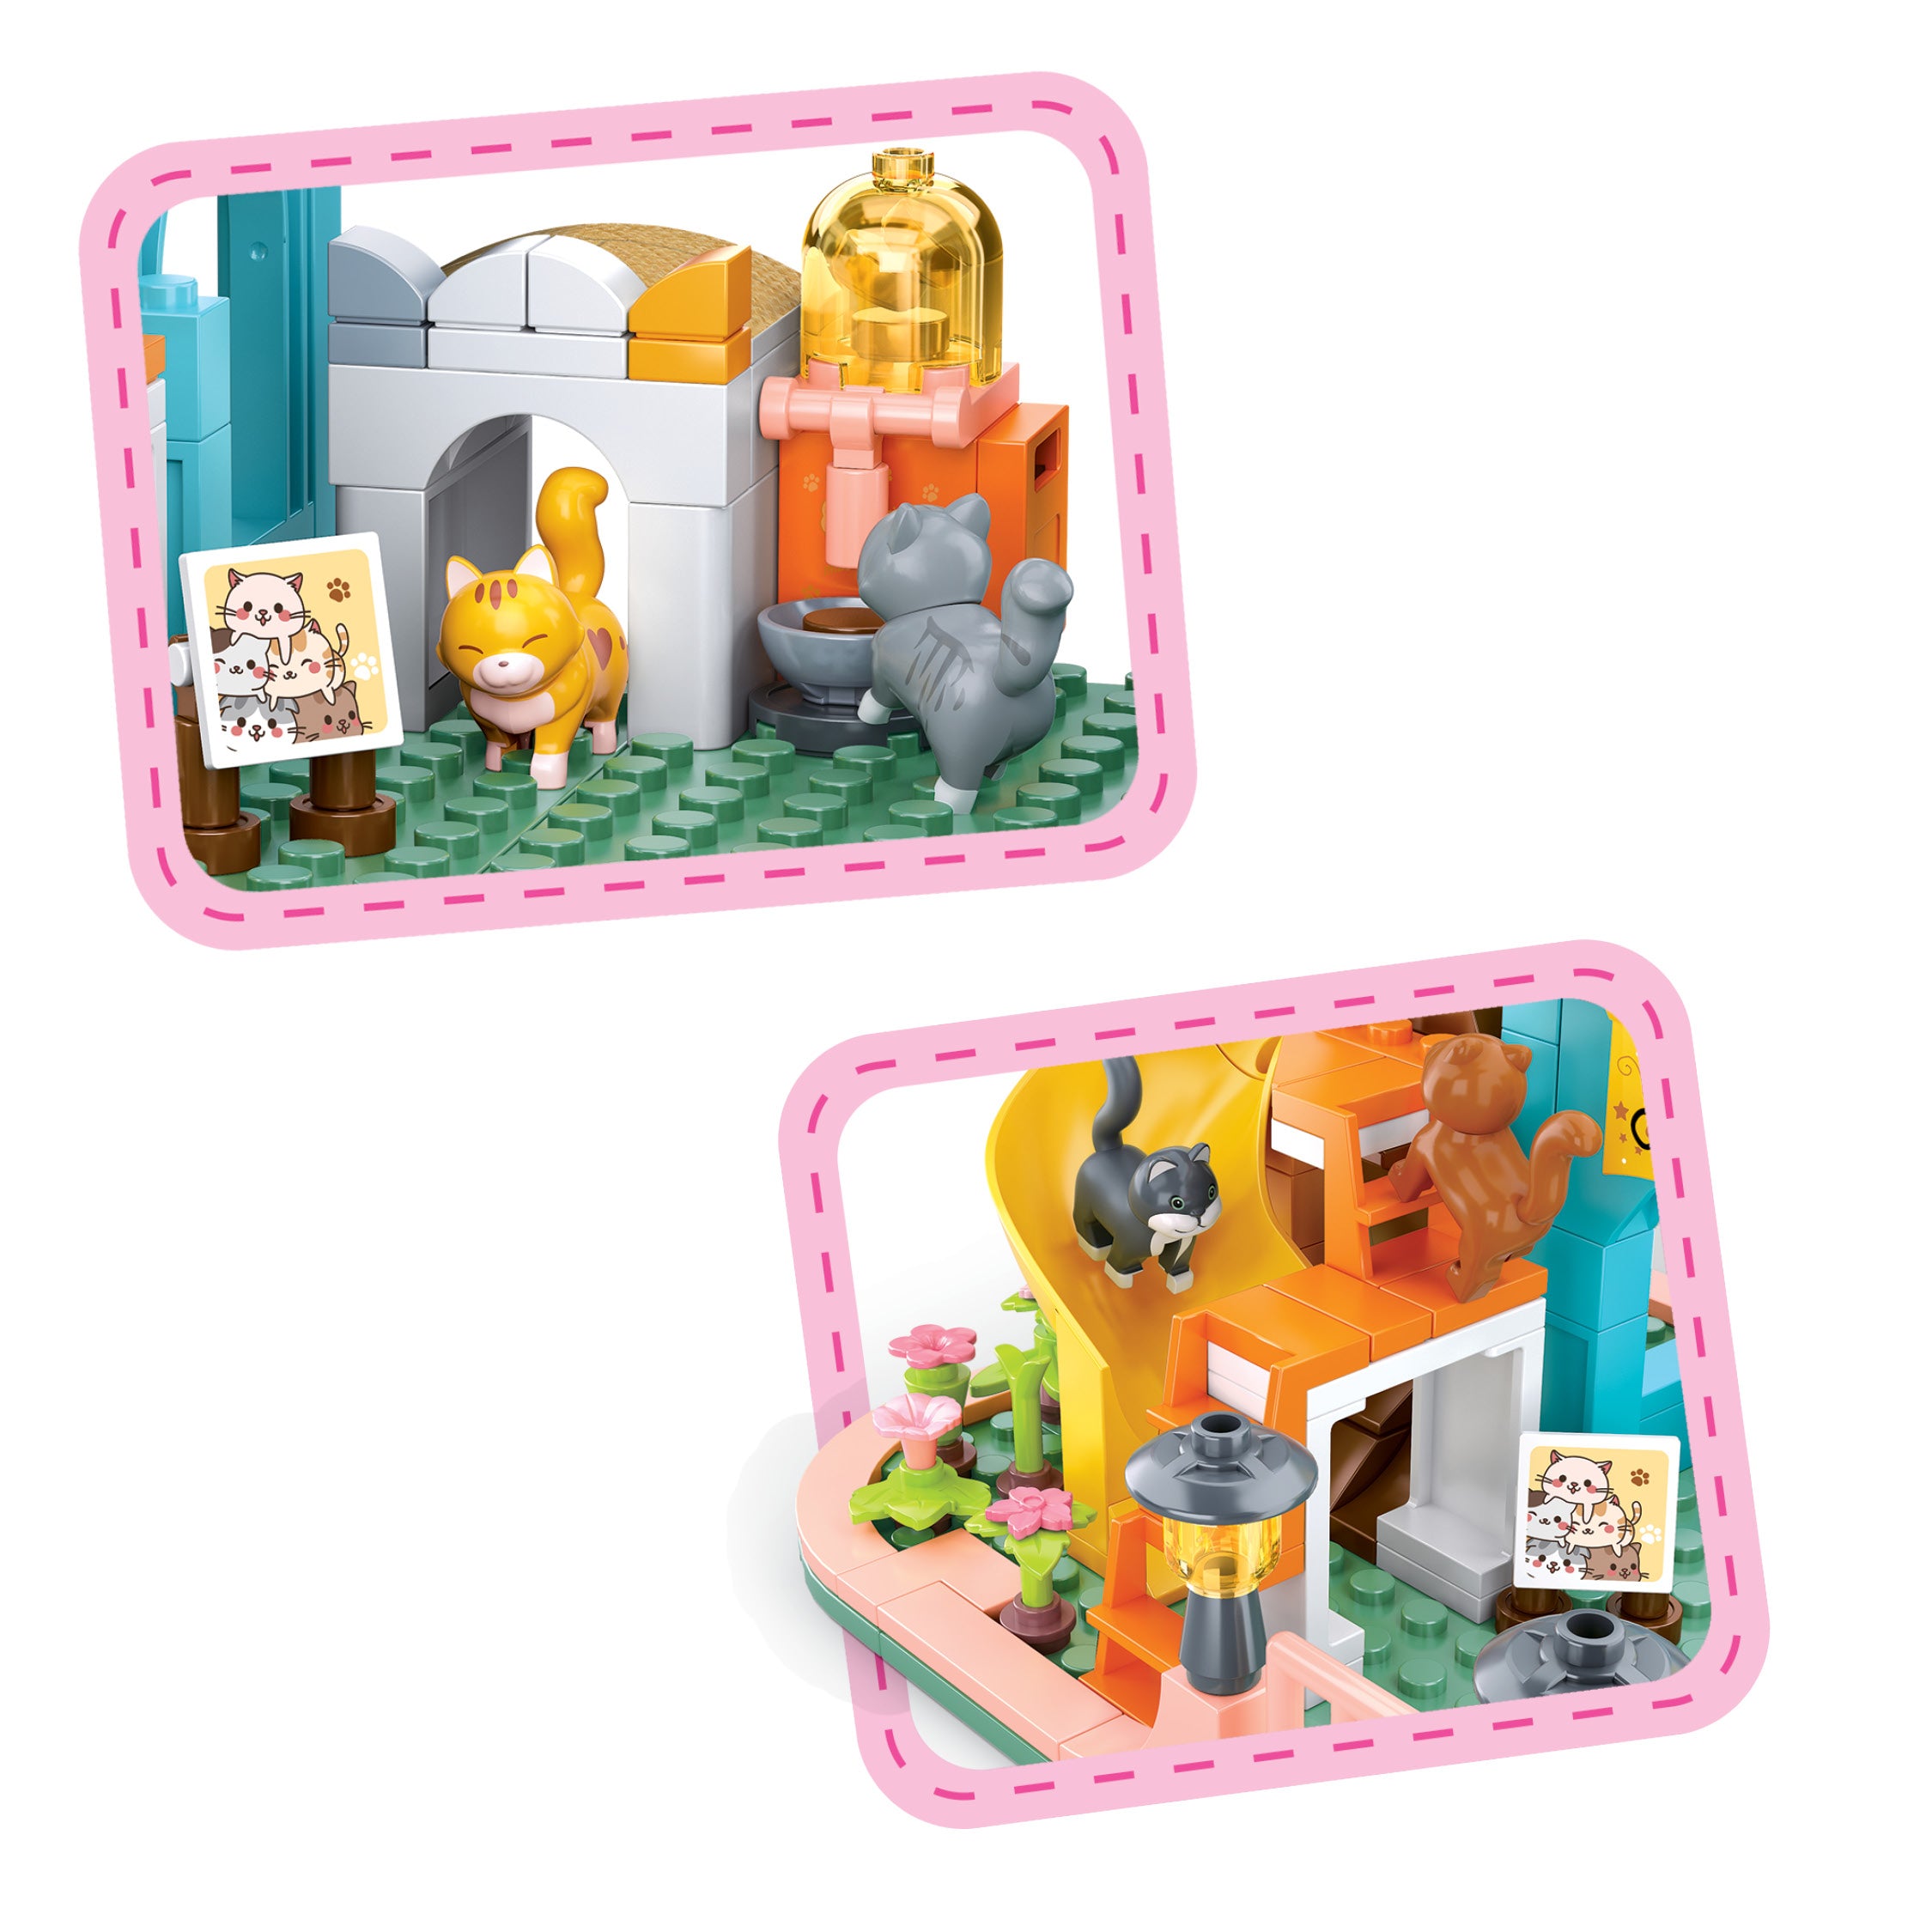 SLUBAN® Girls Dream-Cat House 521 pcs (M38-B1089) Building Blocks Kit For Girls Aged 6 Years And Above Creative Construction  Set Educational STEM Toy